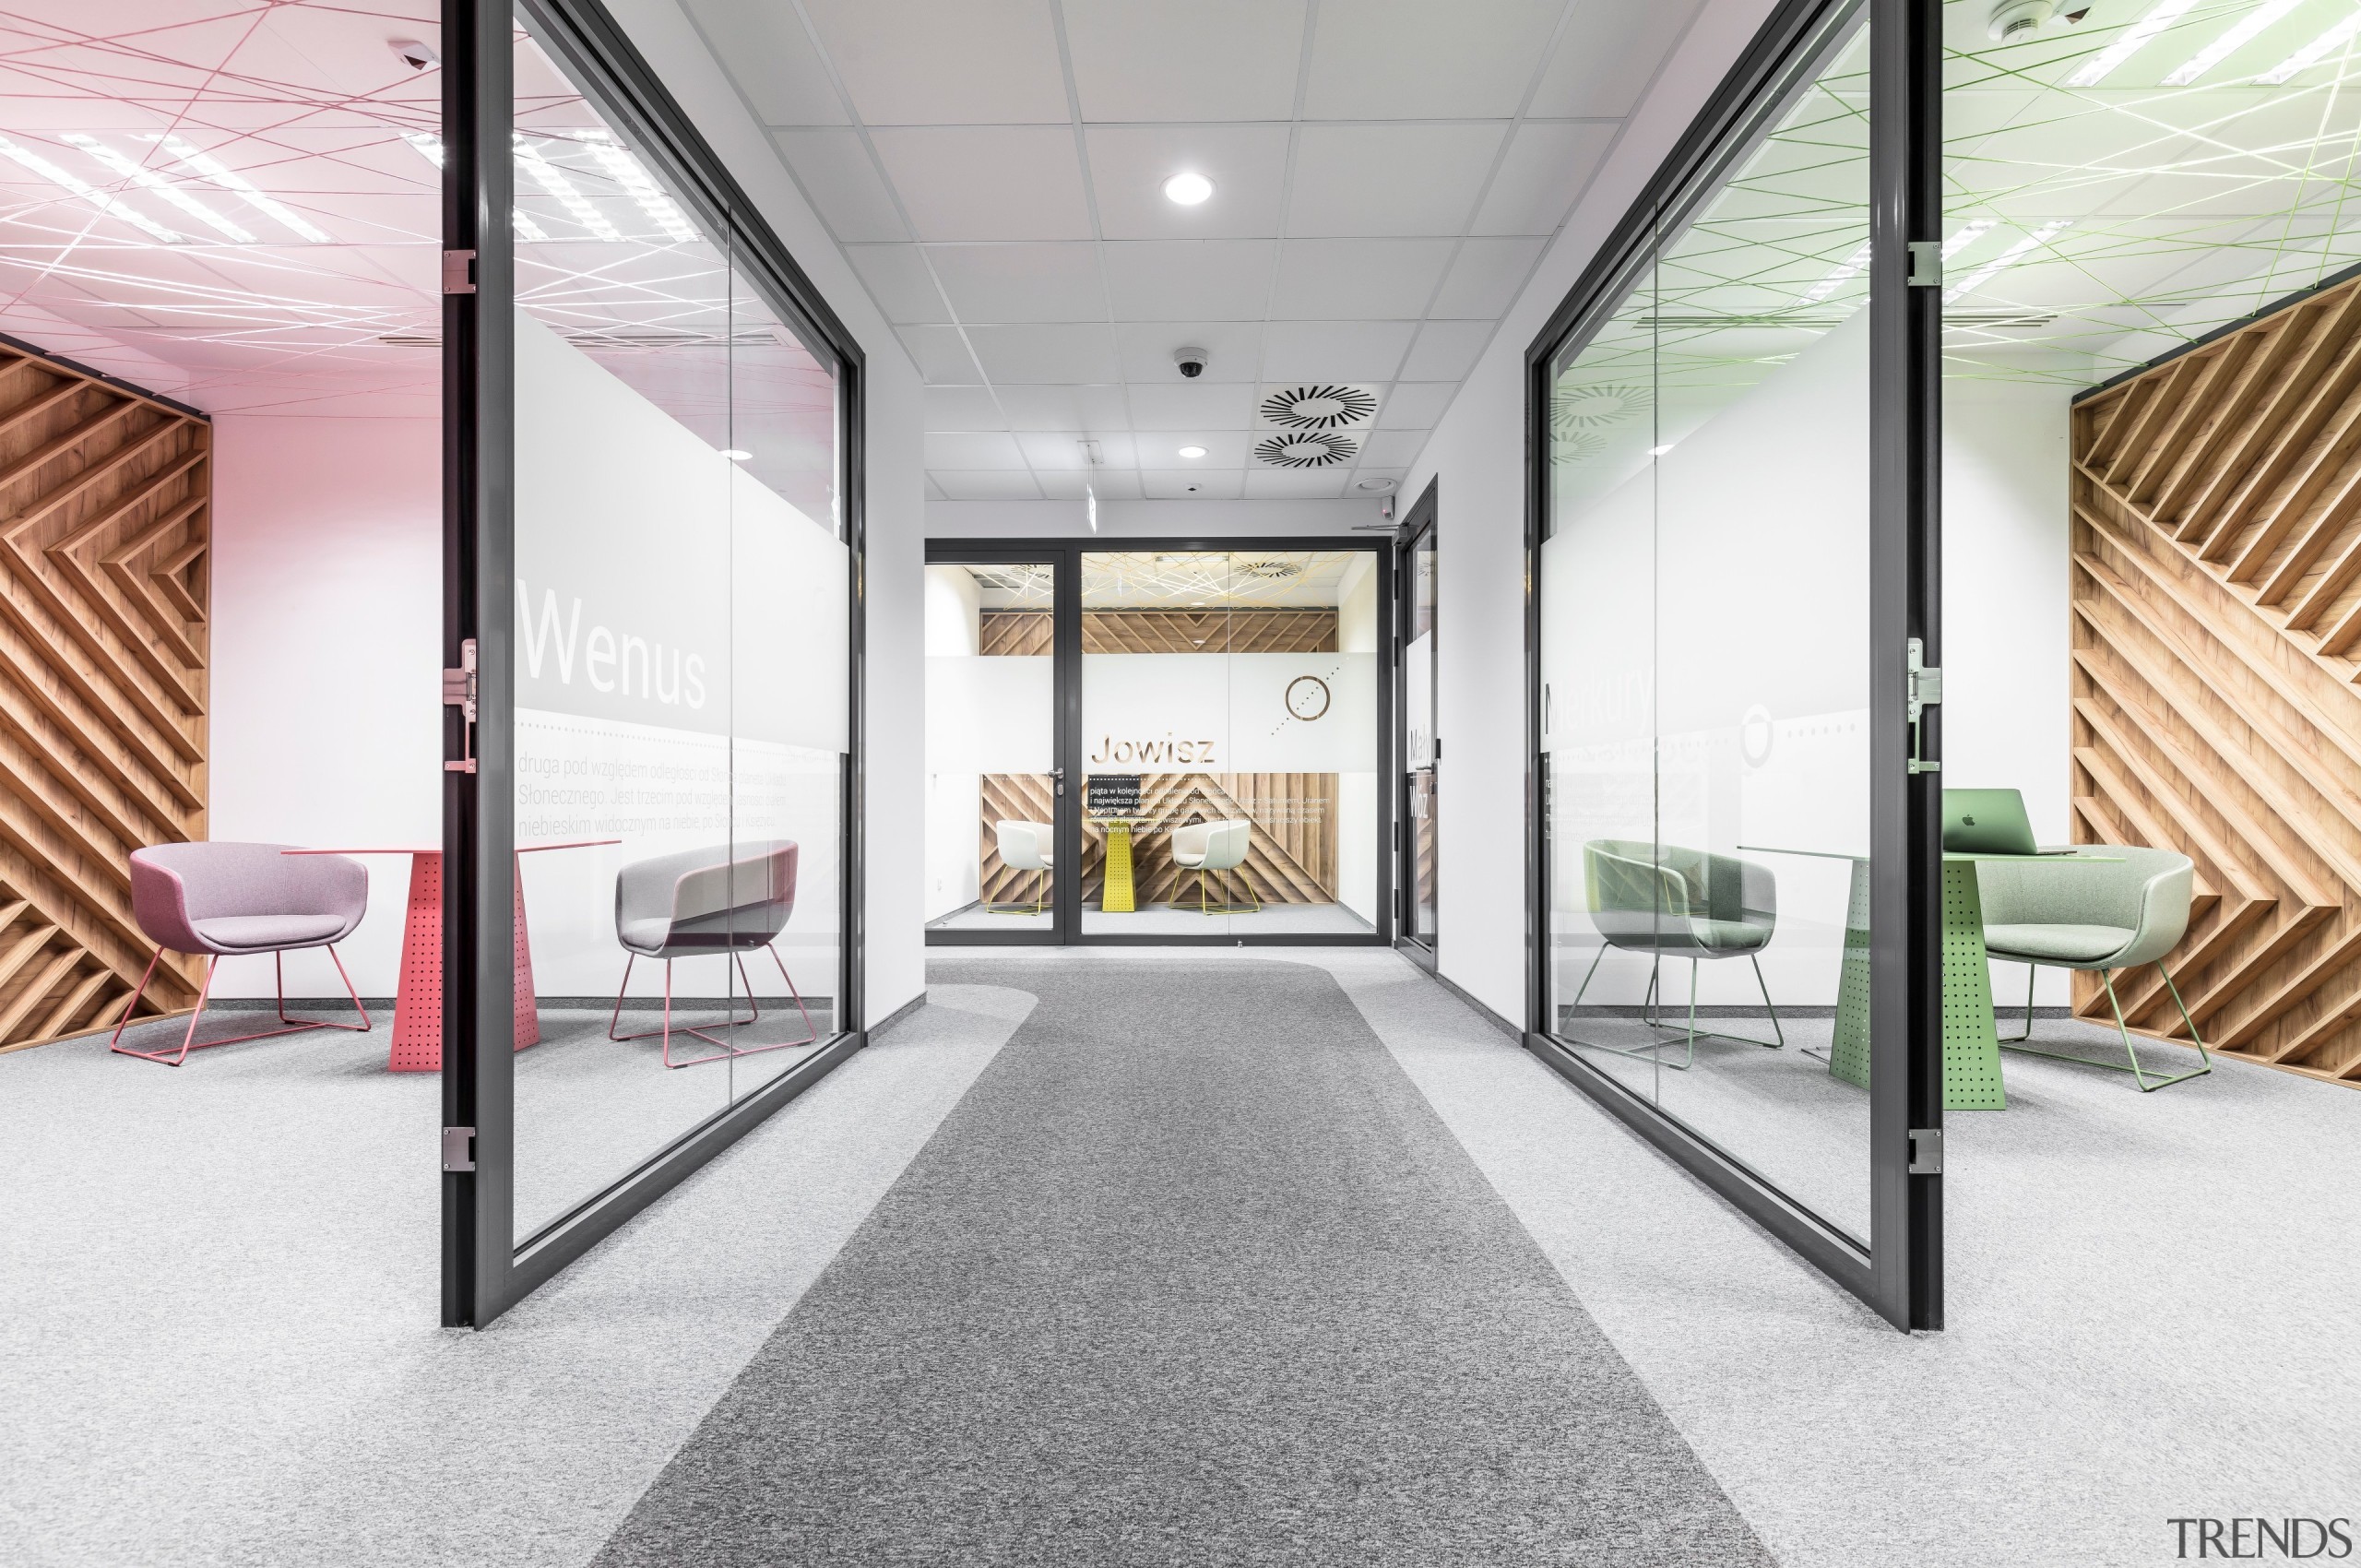 Architect: MetaformaPhotography by Krzysztof Strażyński floor, flooring, interior design, lobby, real estate, white